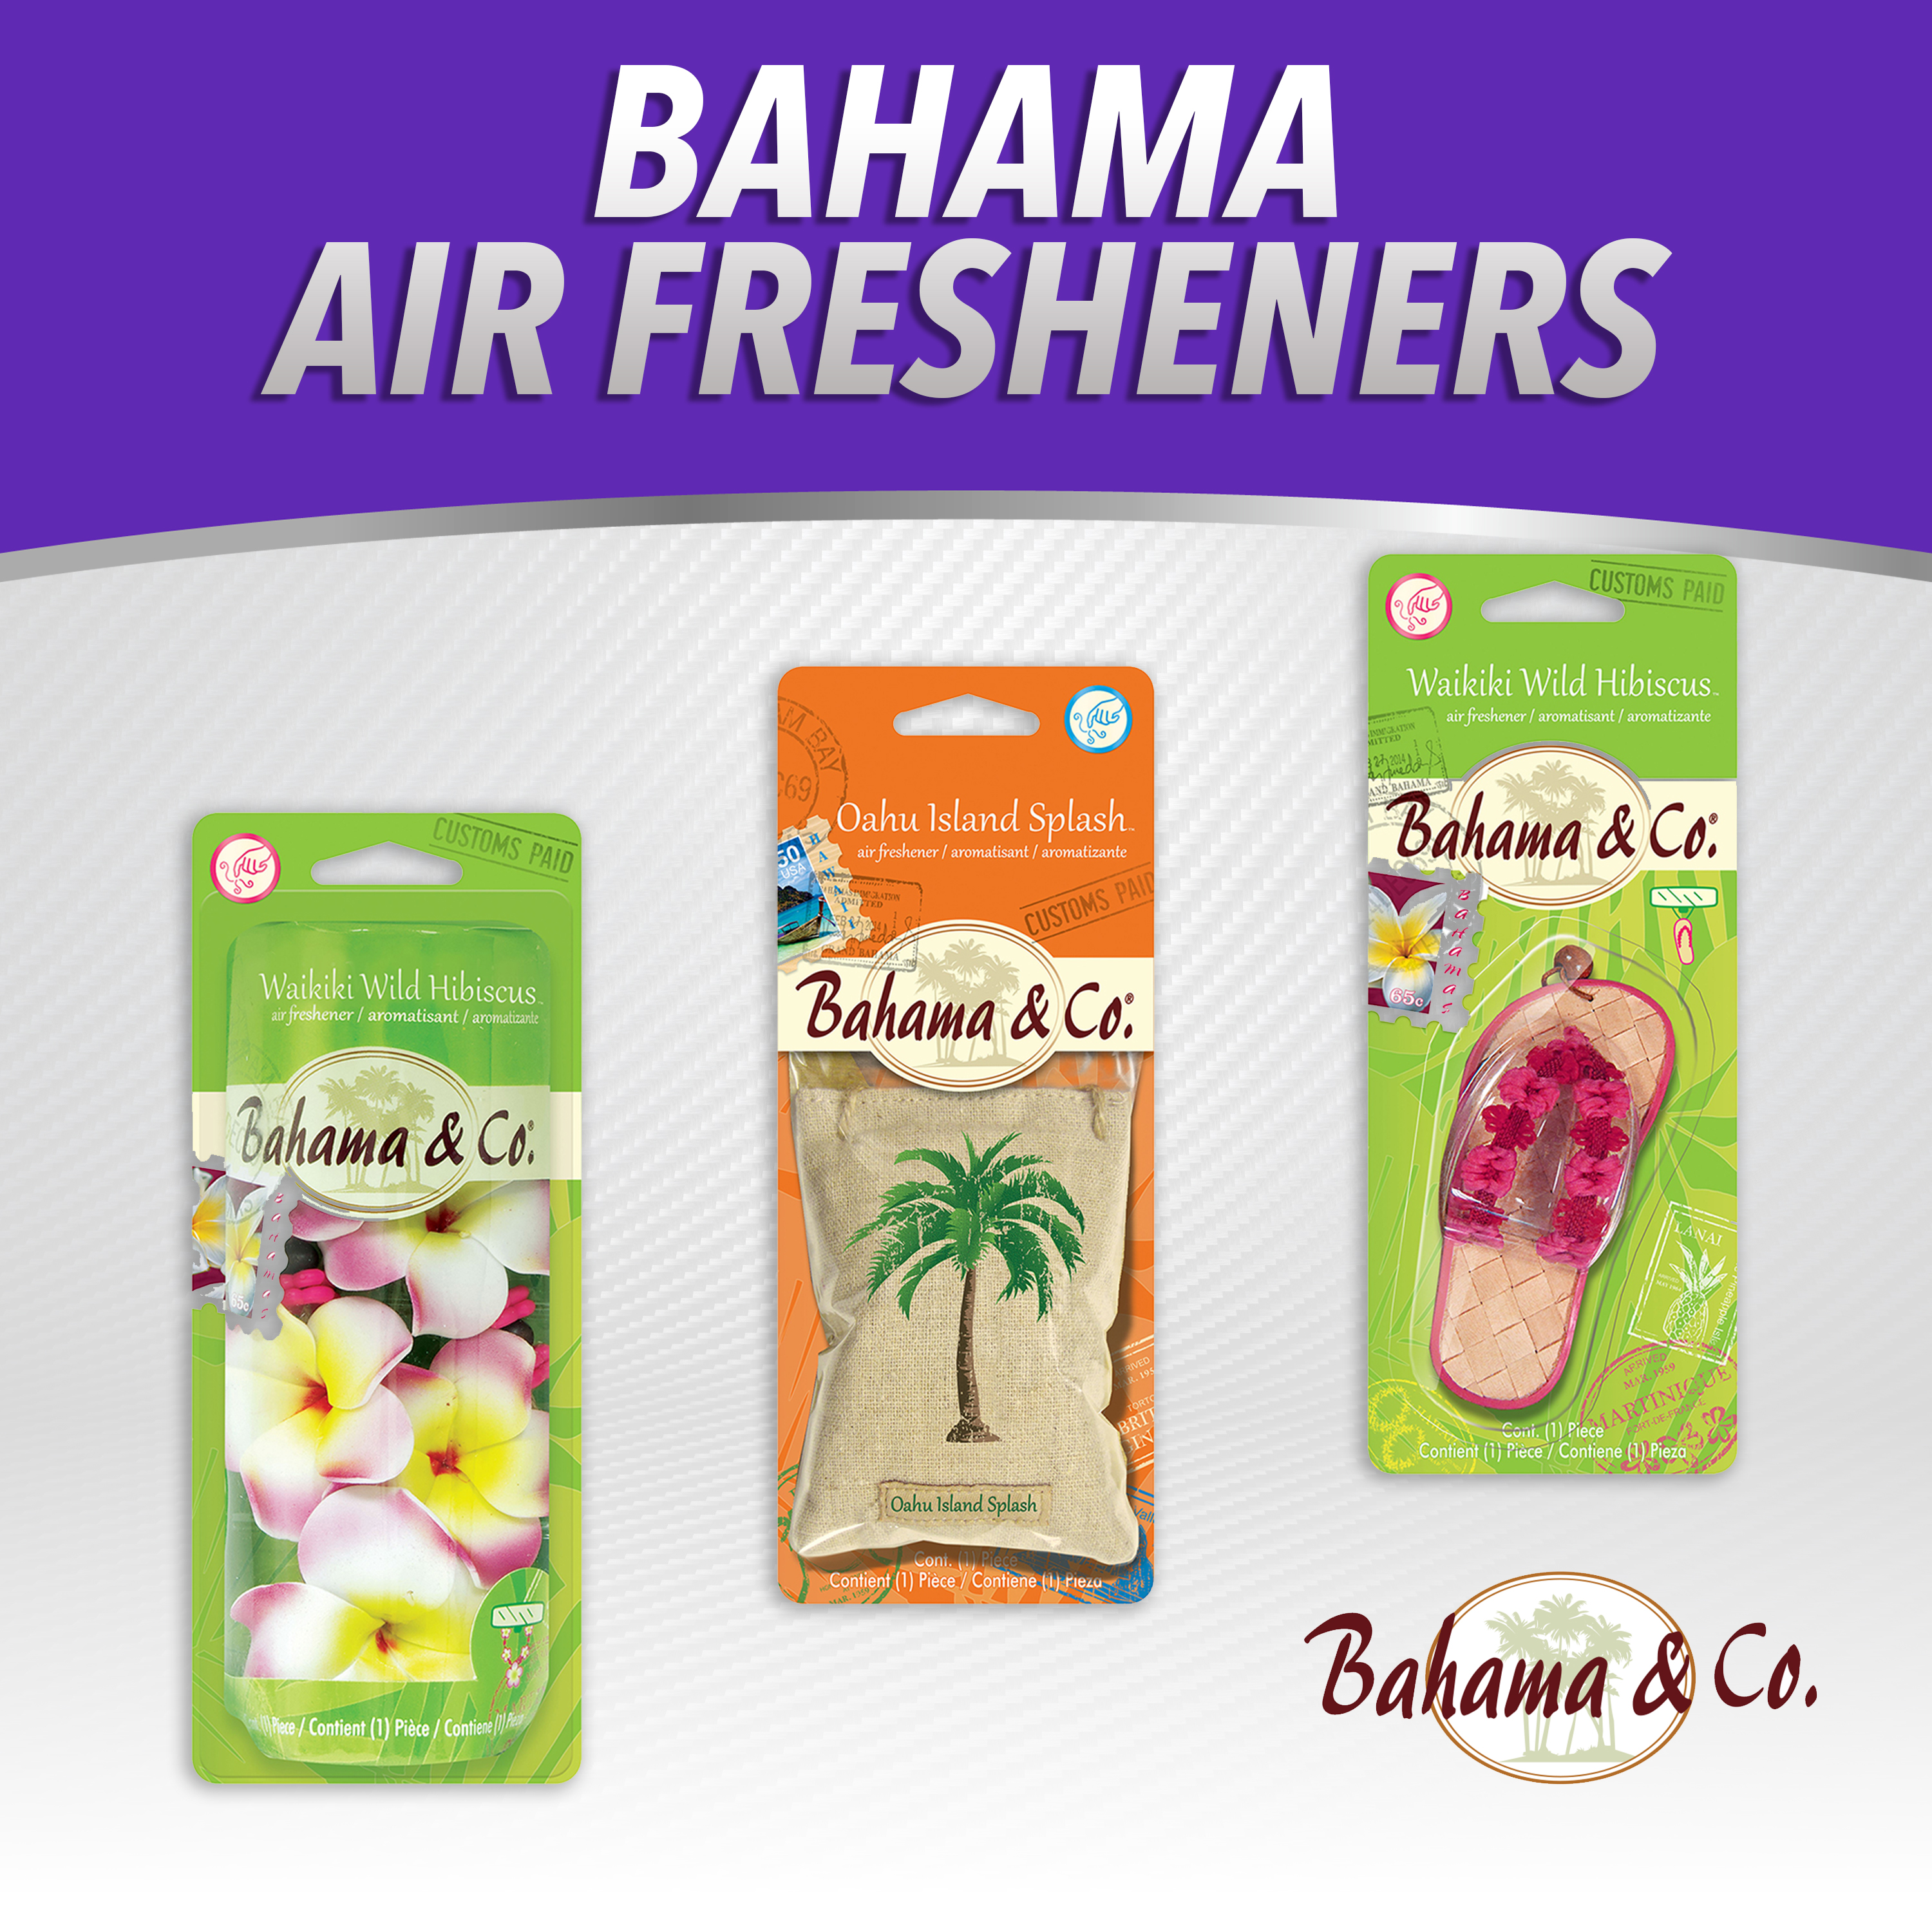 Bahama Air Fresheners